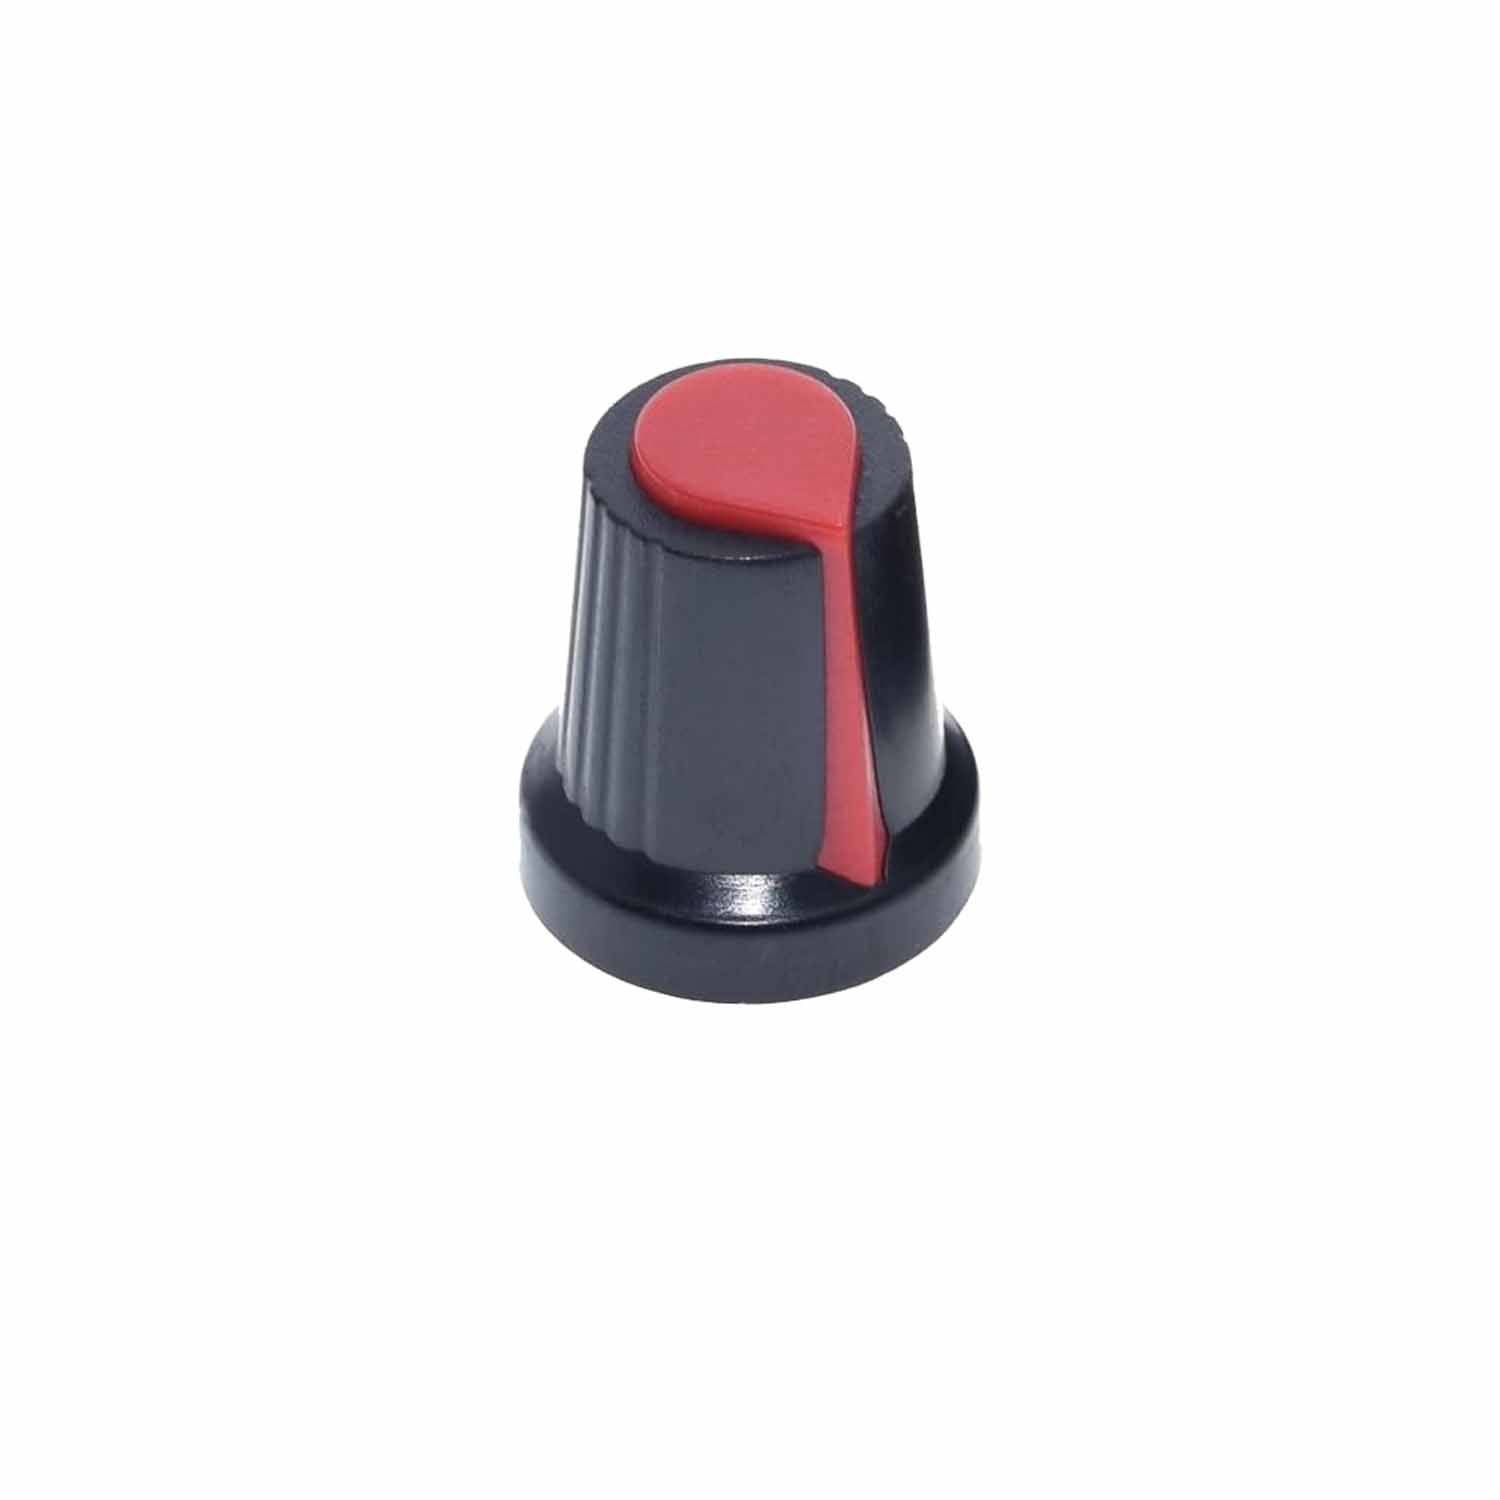 Potentiometer Knob Cap Rotary Switch Cap Inner 6mm - Red